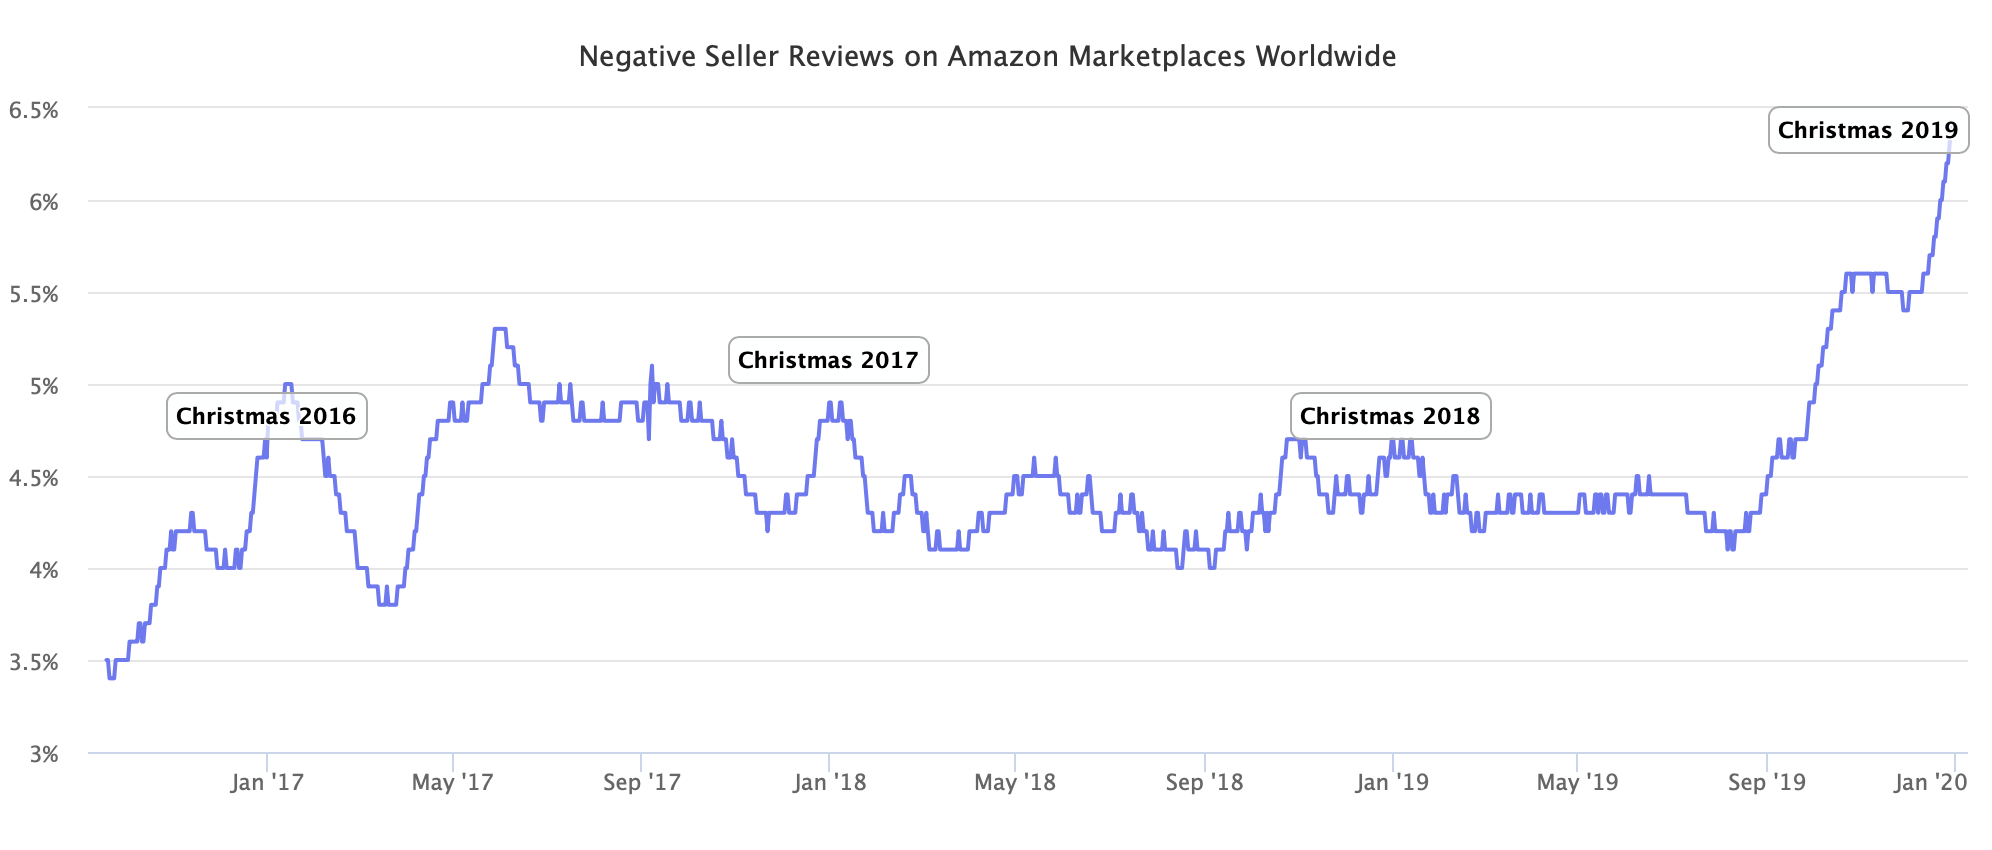 Negative Seller Reviews on Amazon Marketplaces Worldwide